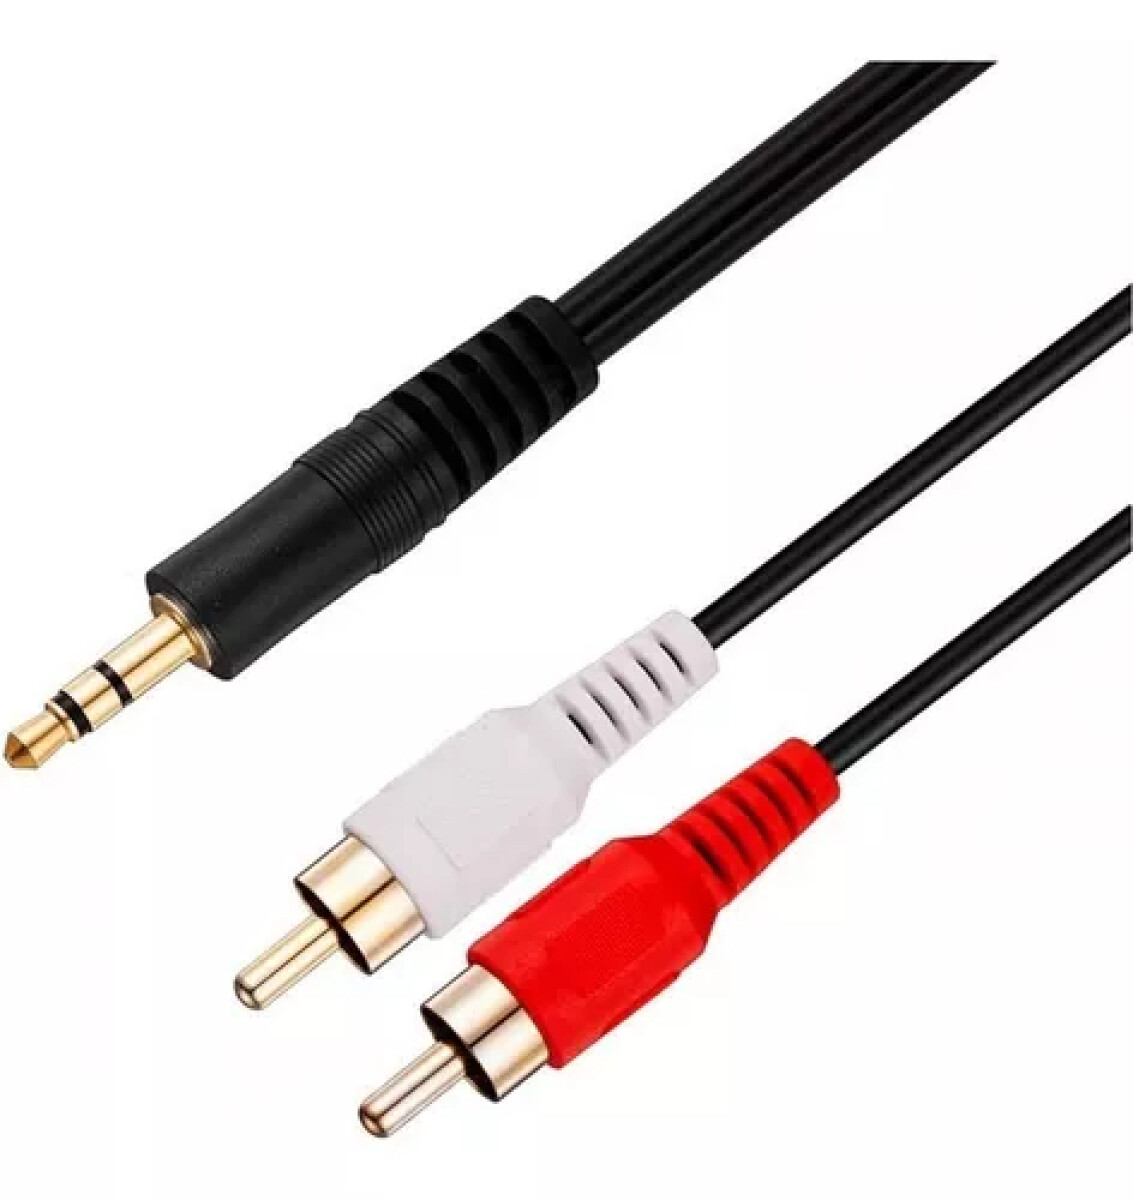 Cable Audio 2 RCA M/1 Plug M 4,5 mts | Anbyte - Cable Audio 2 Rca M/1 Plug M 4,5 Mts | Anbyte 